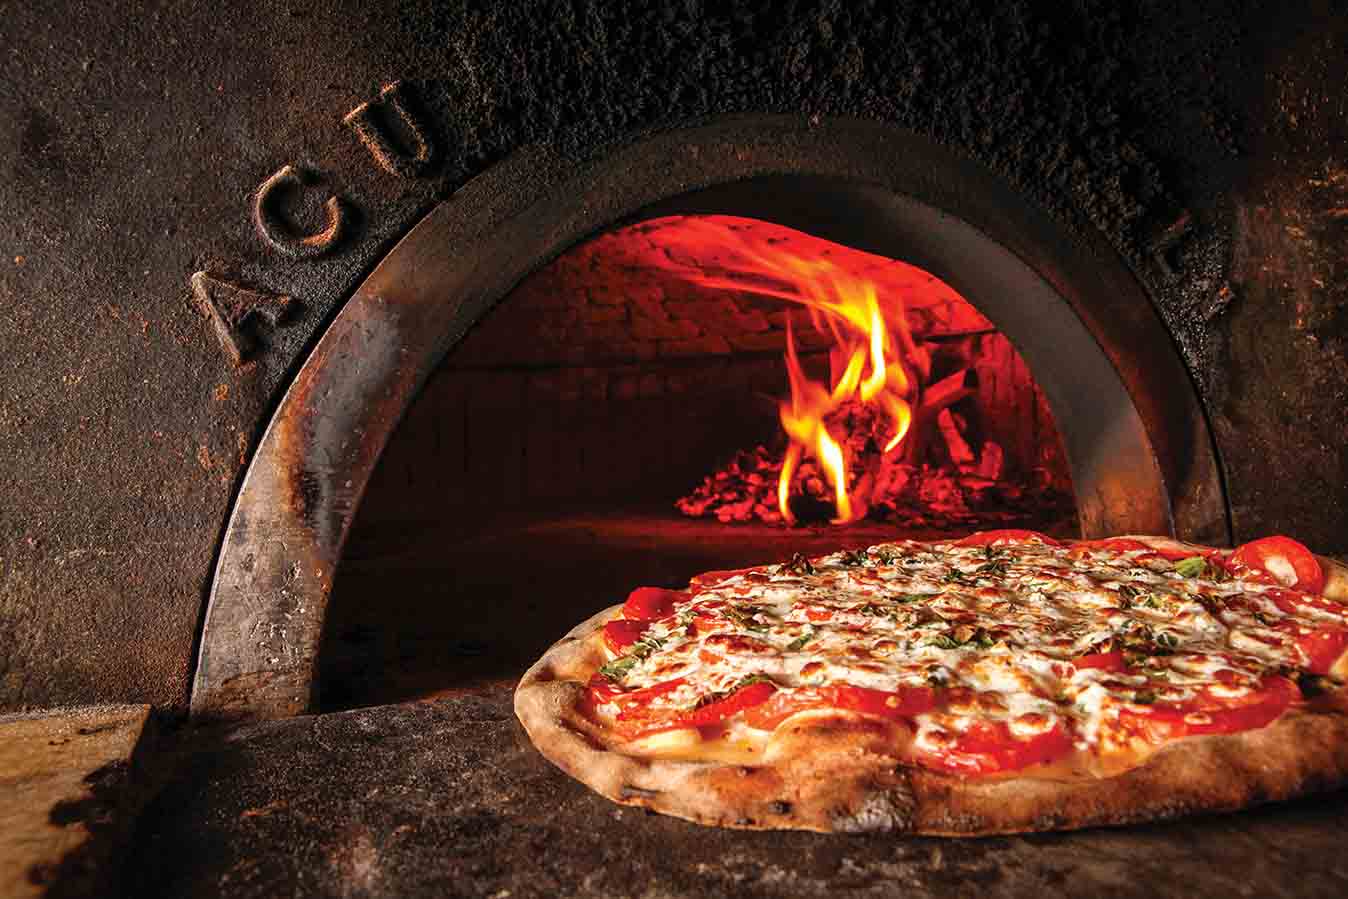 Dia-da-Pizza-forno-a-g%C3%A1s-vira-tend%